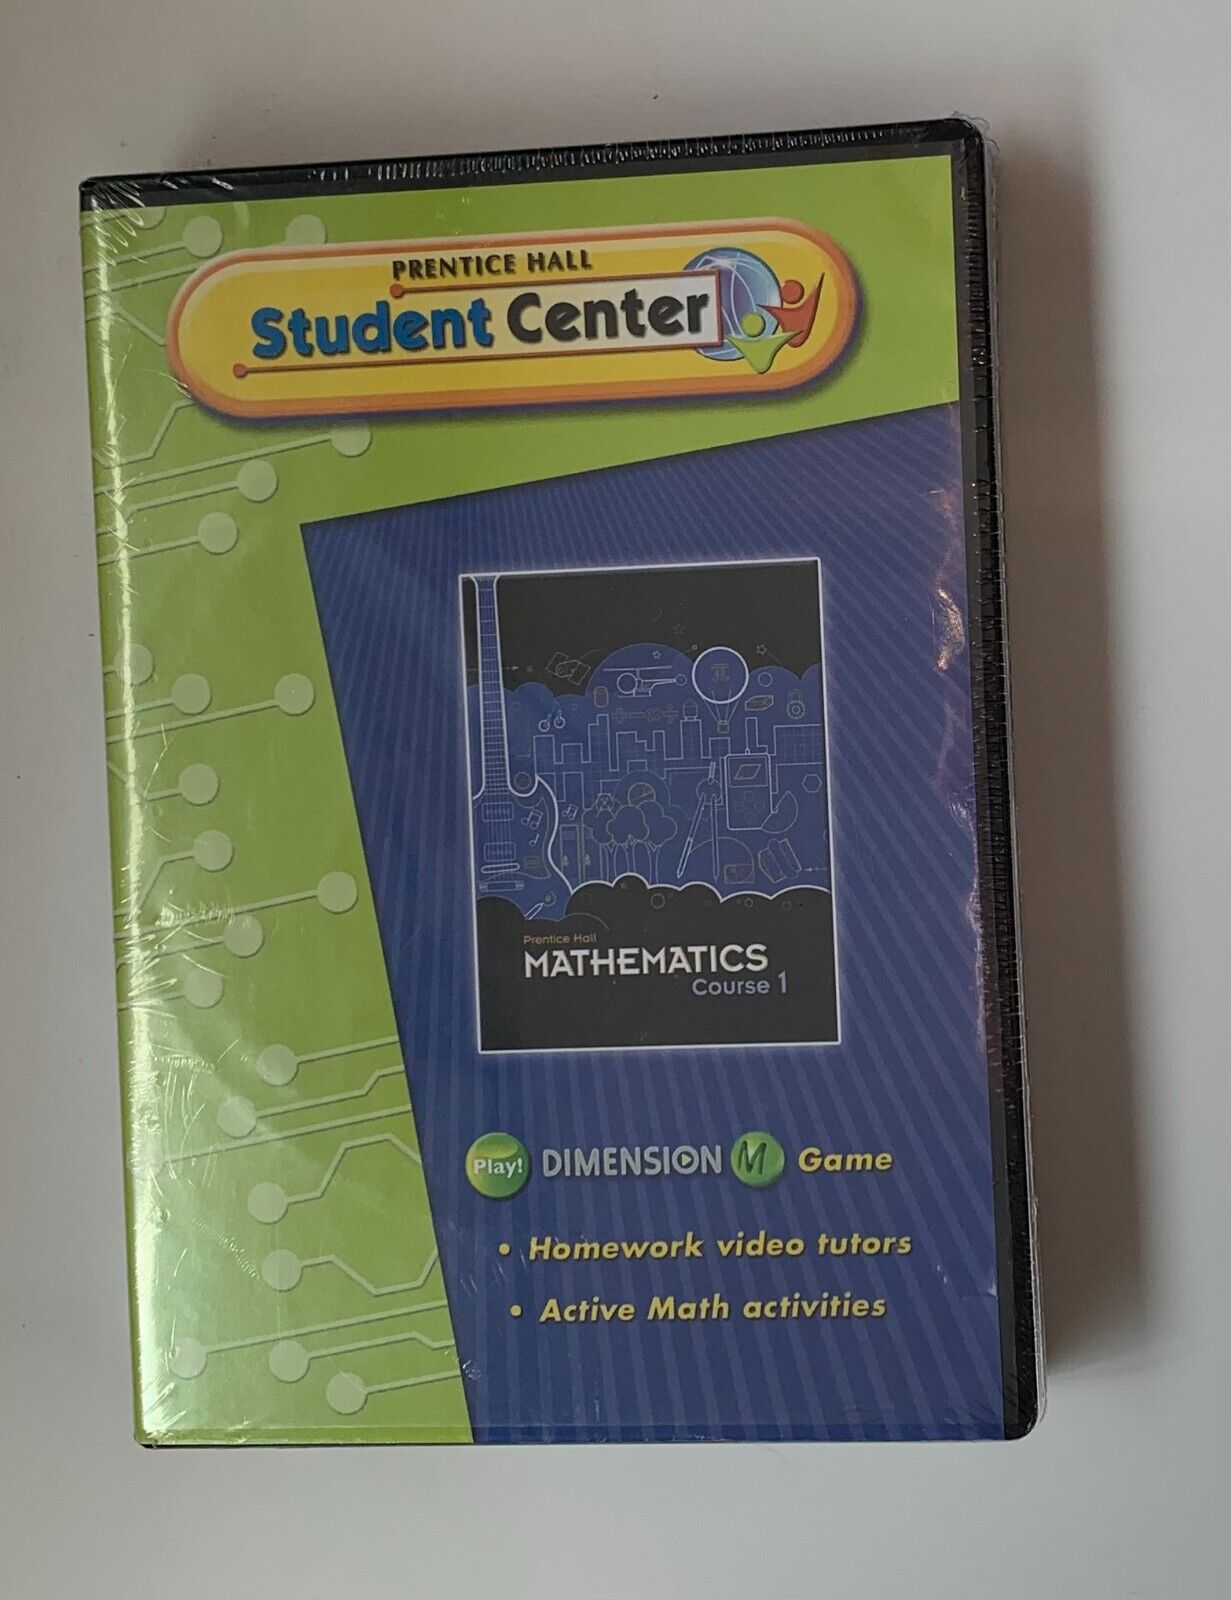 Prentice Hall Student Center Mathematics Course 1 CD W/Game Original Sealed NEW